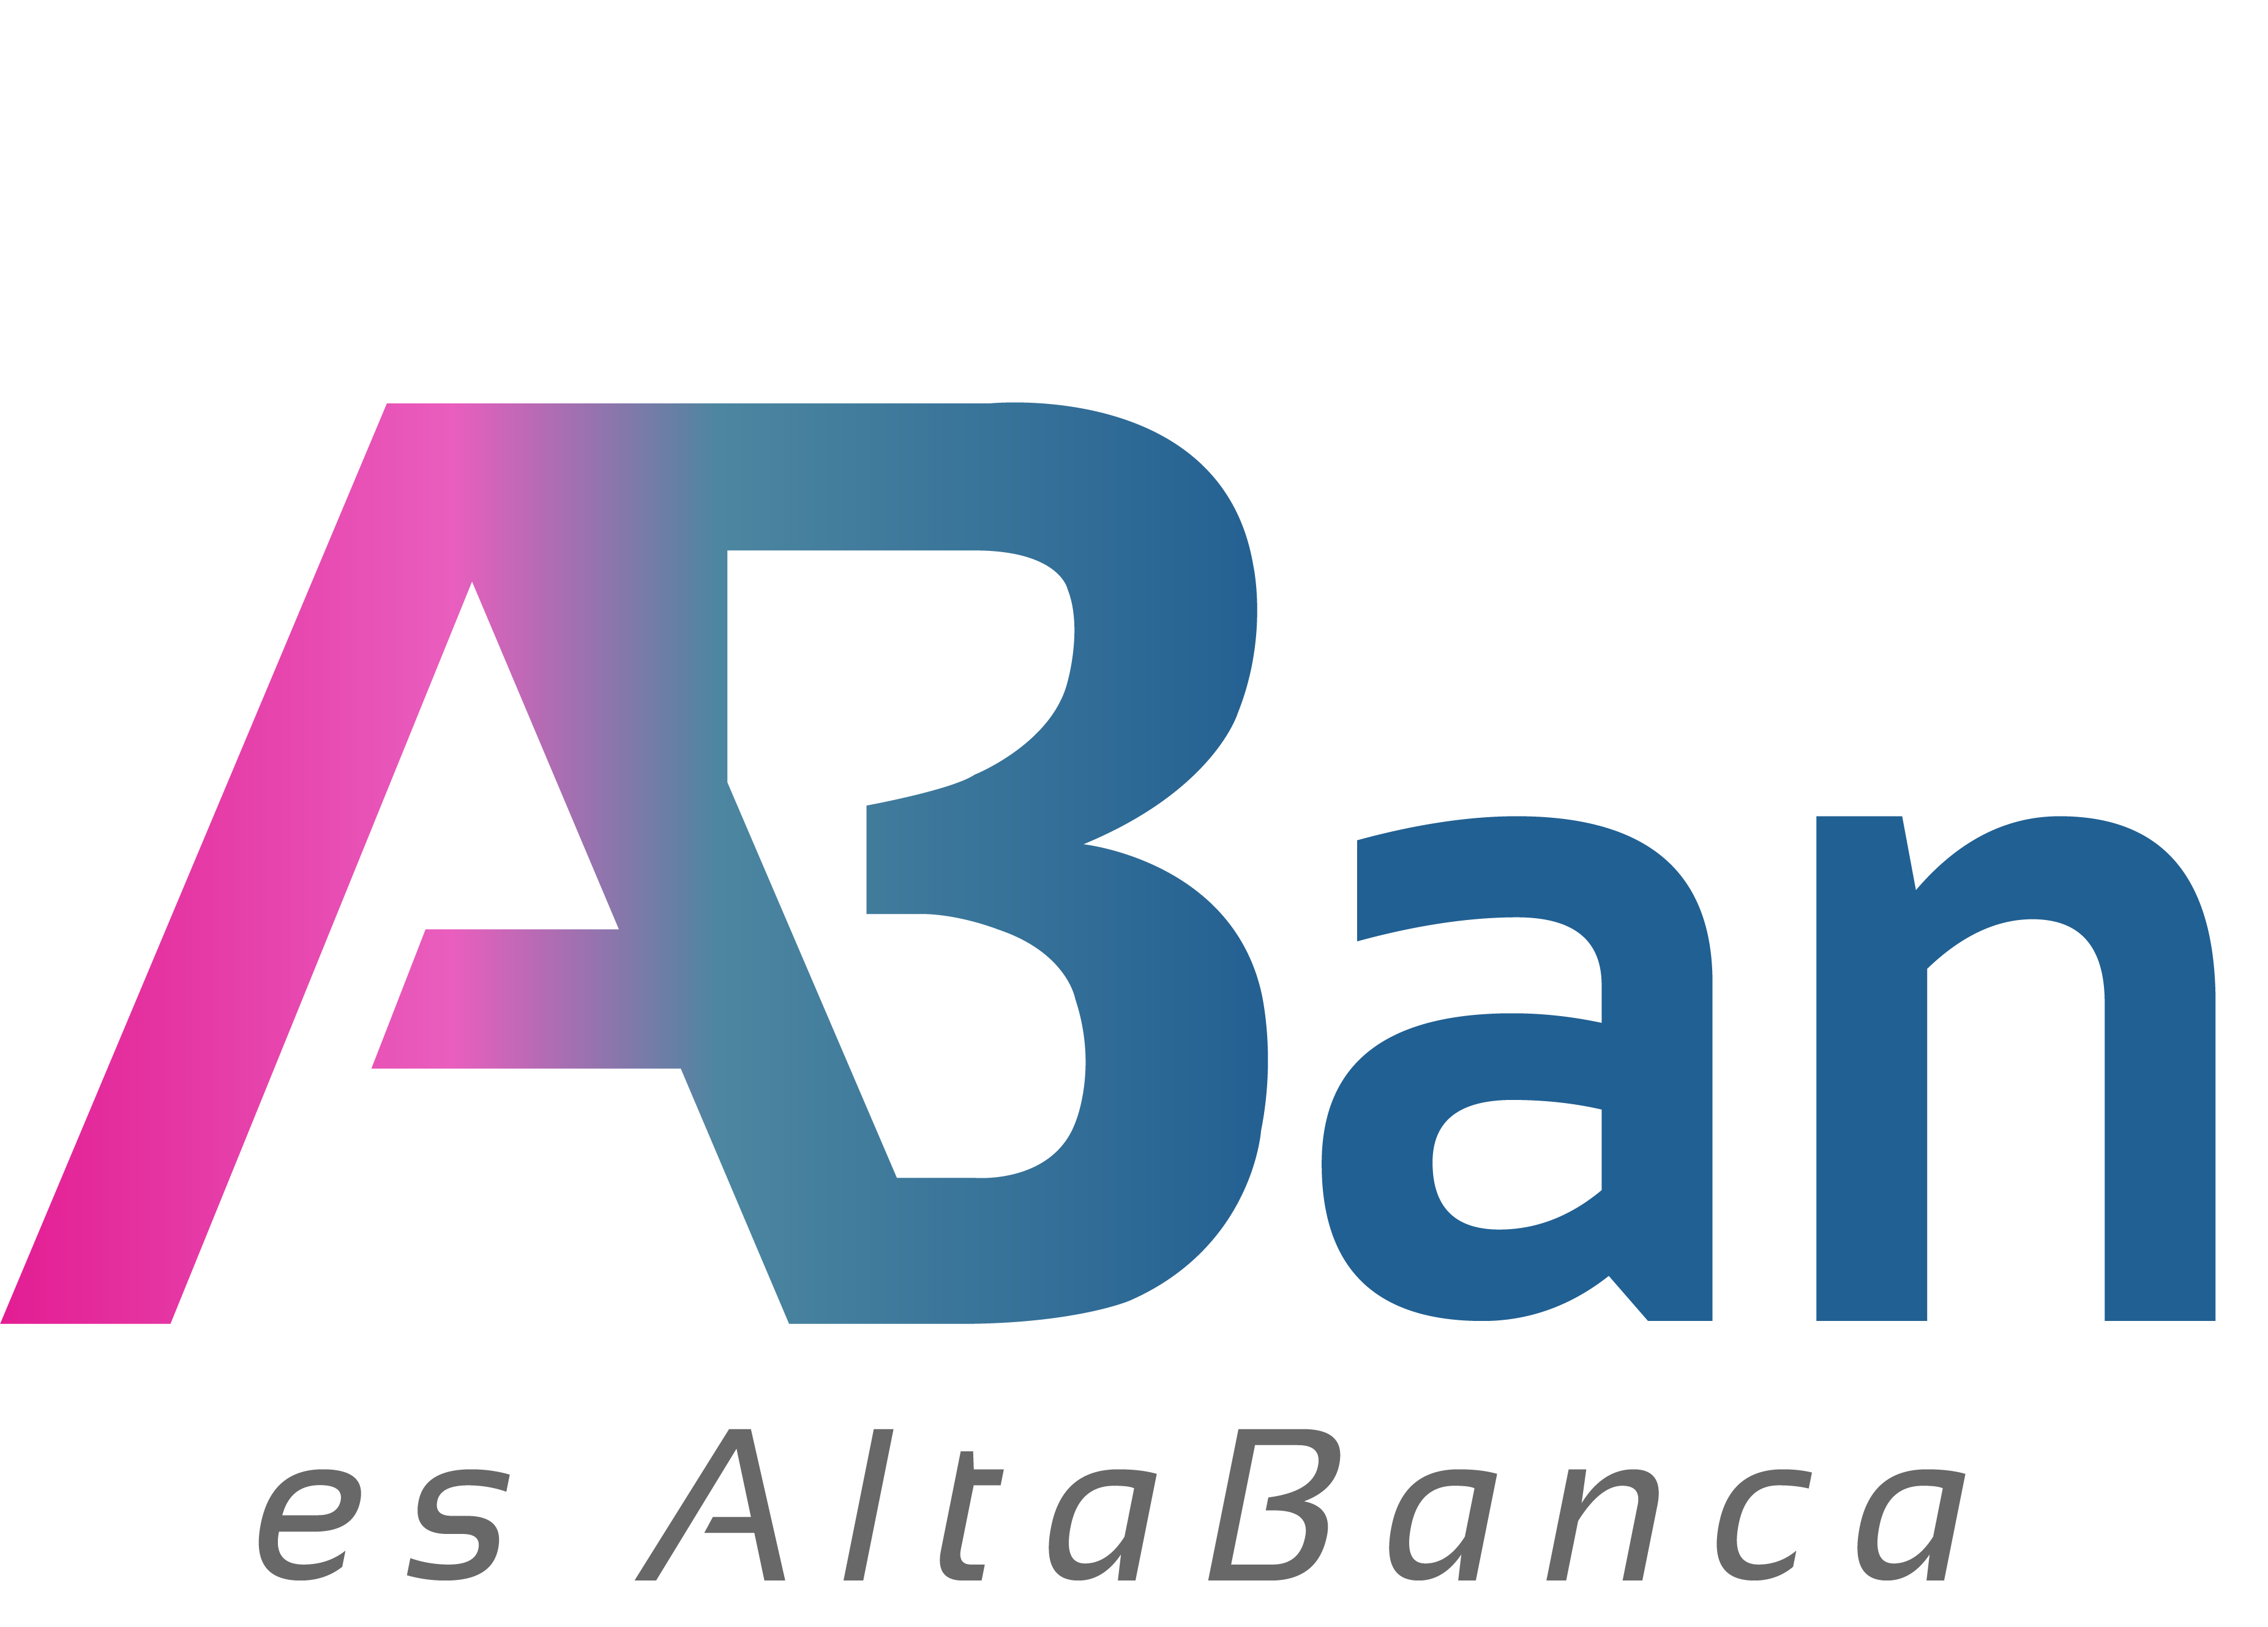 AltaBanca